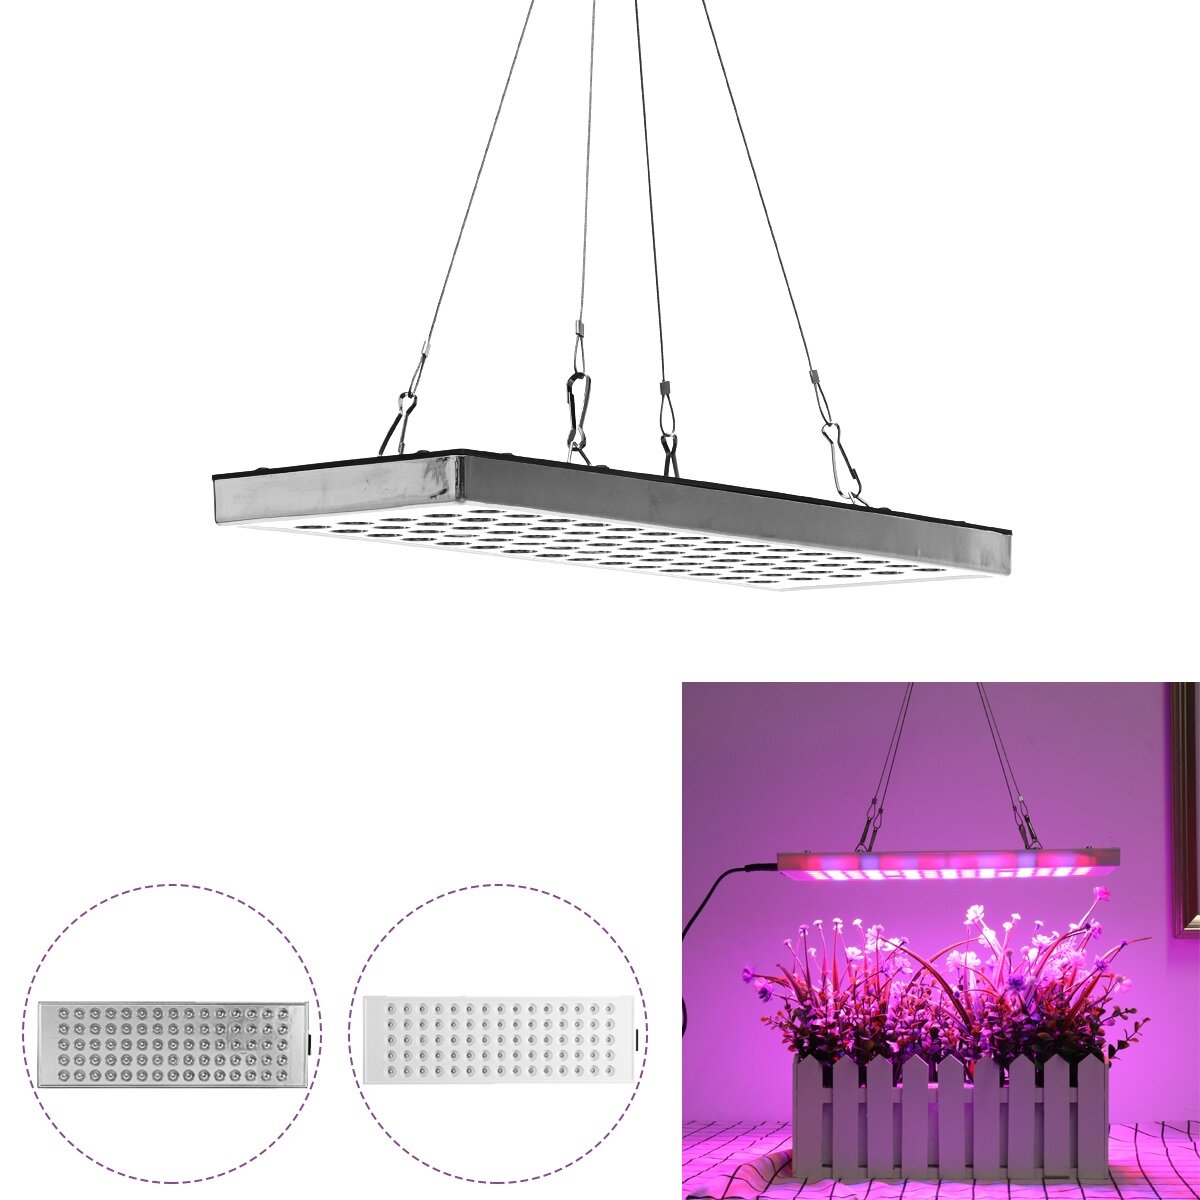 75LED Volledige spectrumplant UV Groeilicht Veg-lamp voor hydrocultuur binnenshuis